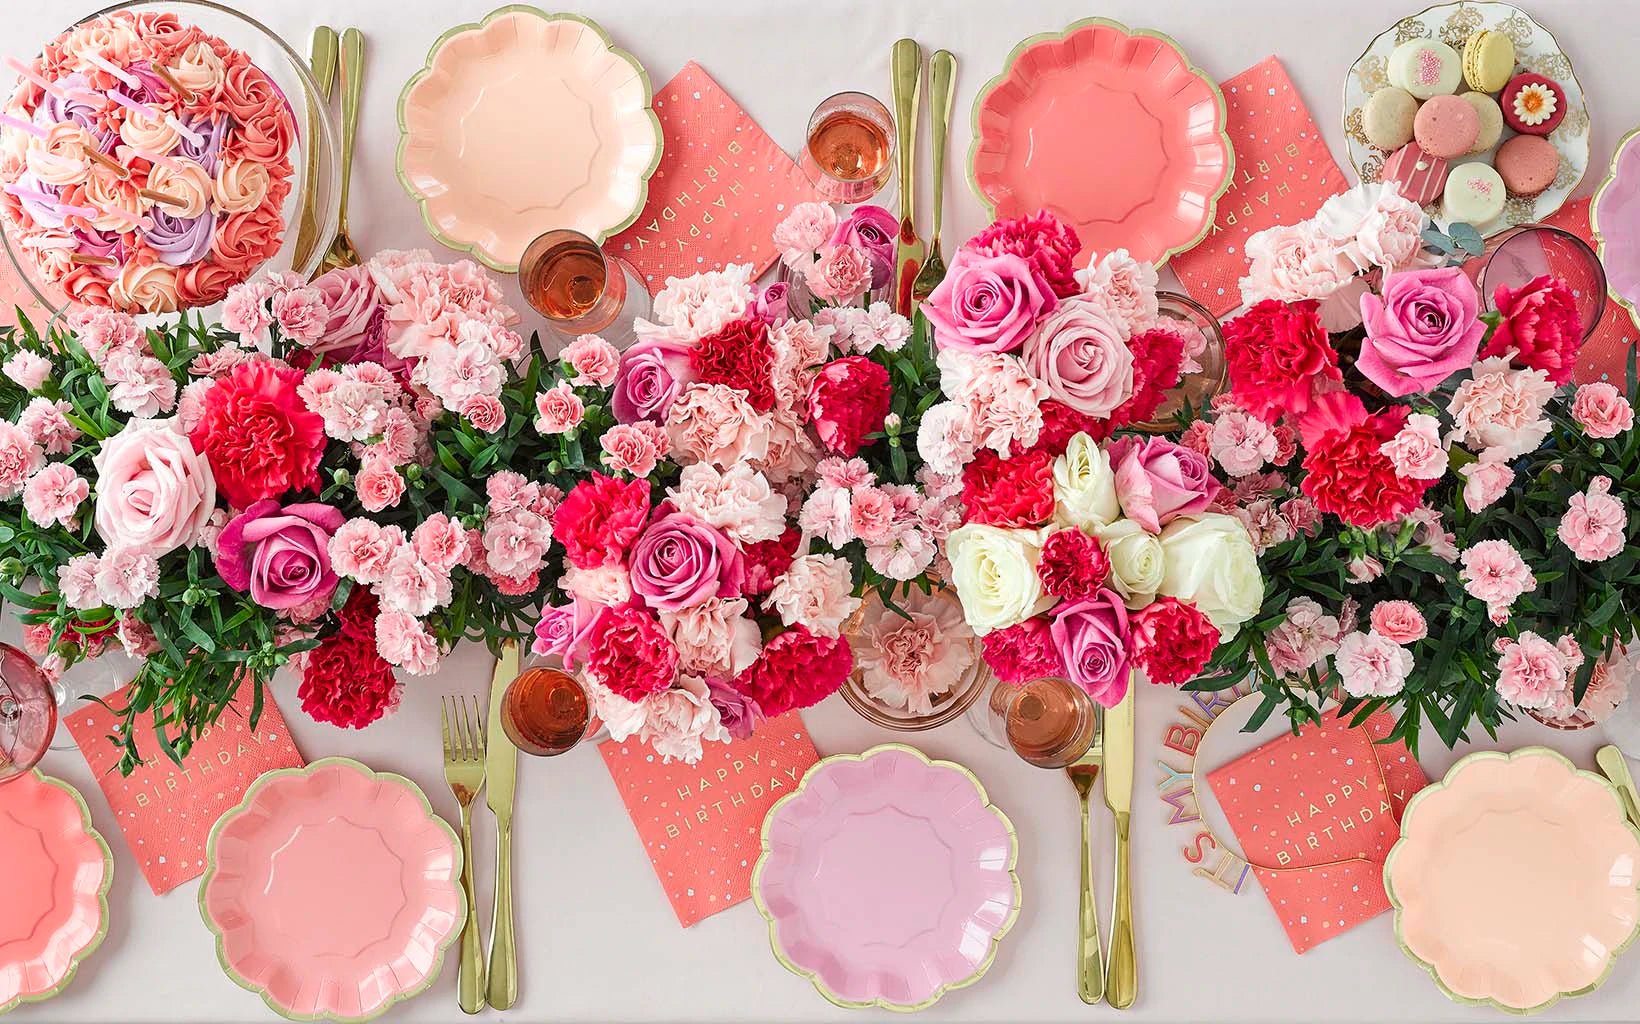 Rose Pink Party Plates - Oh My Darling Party Co-bohoboho partybotanical #Fringe_Backdrop#